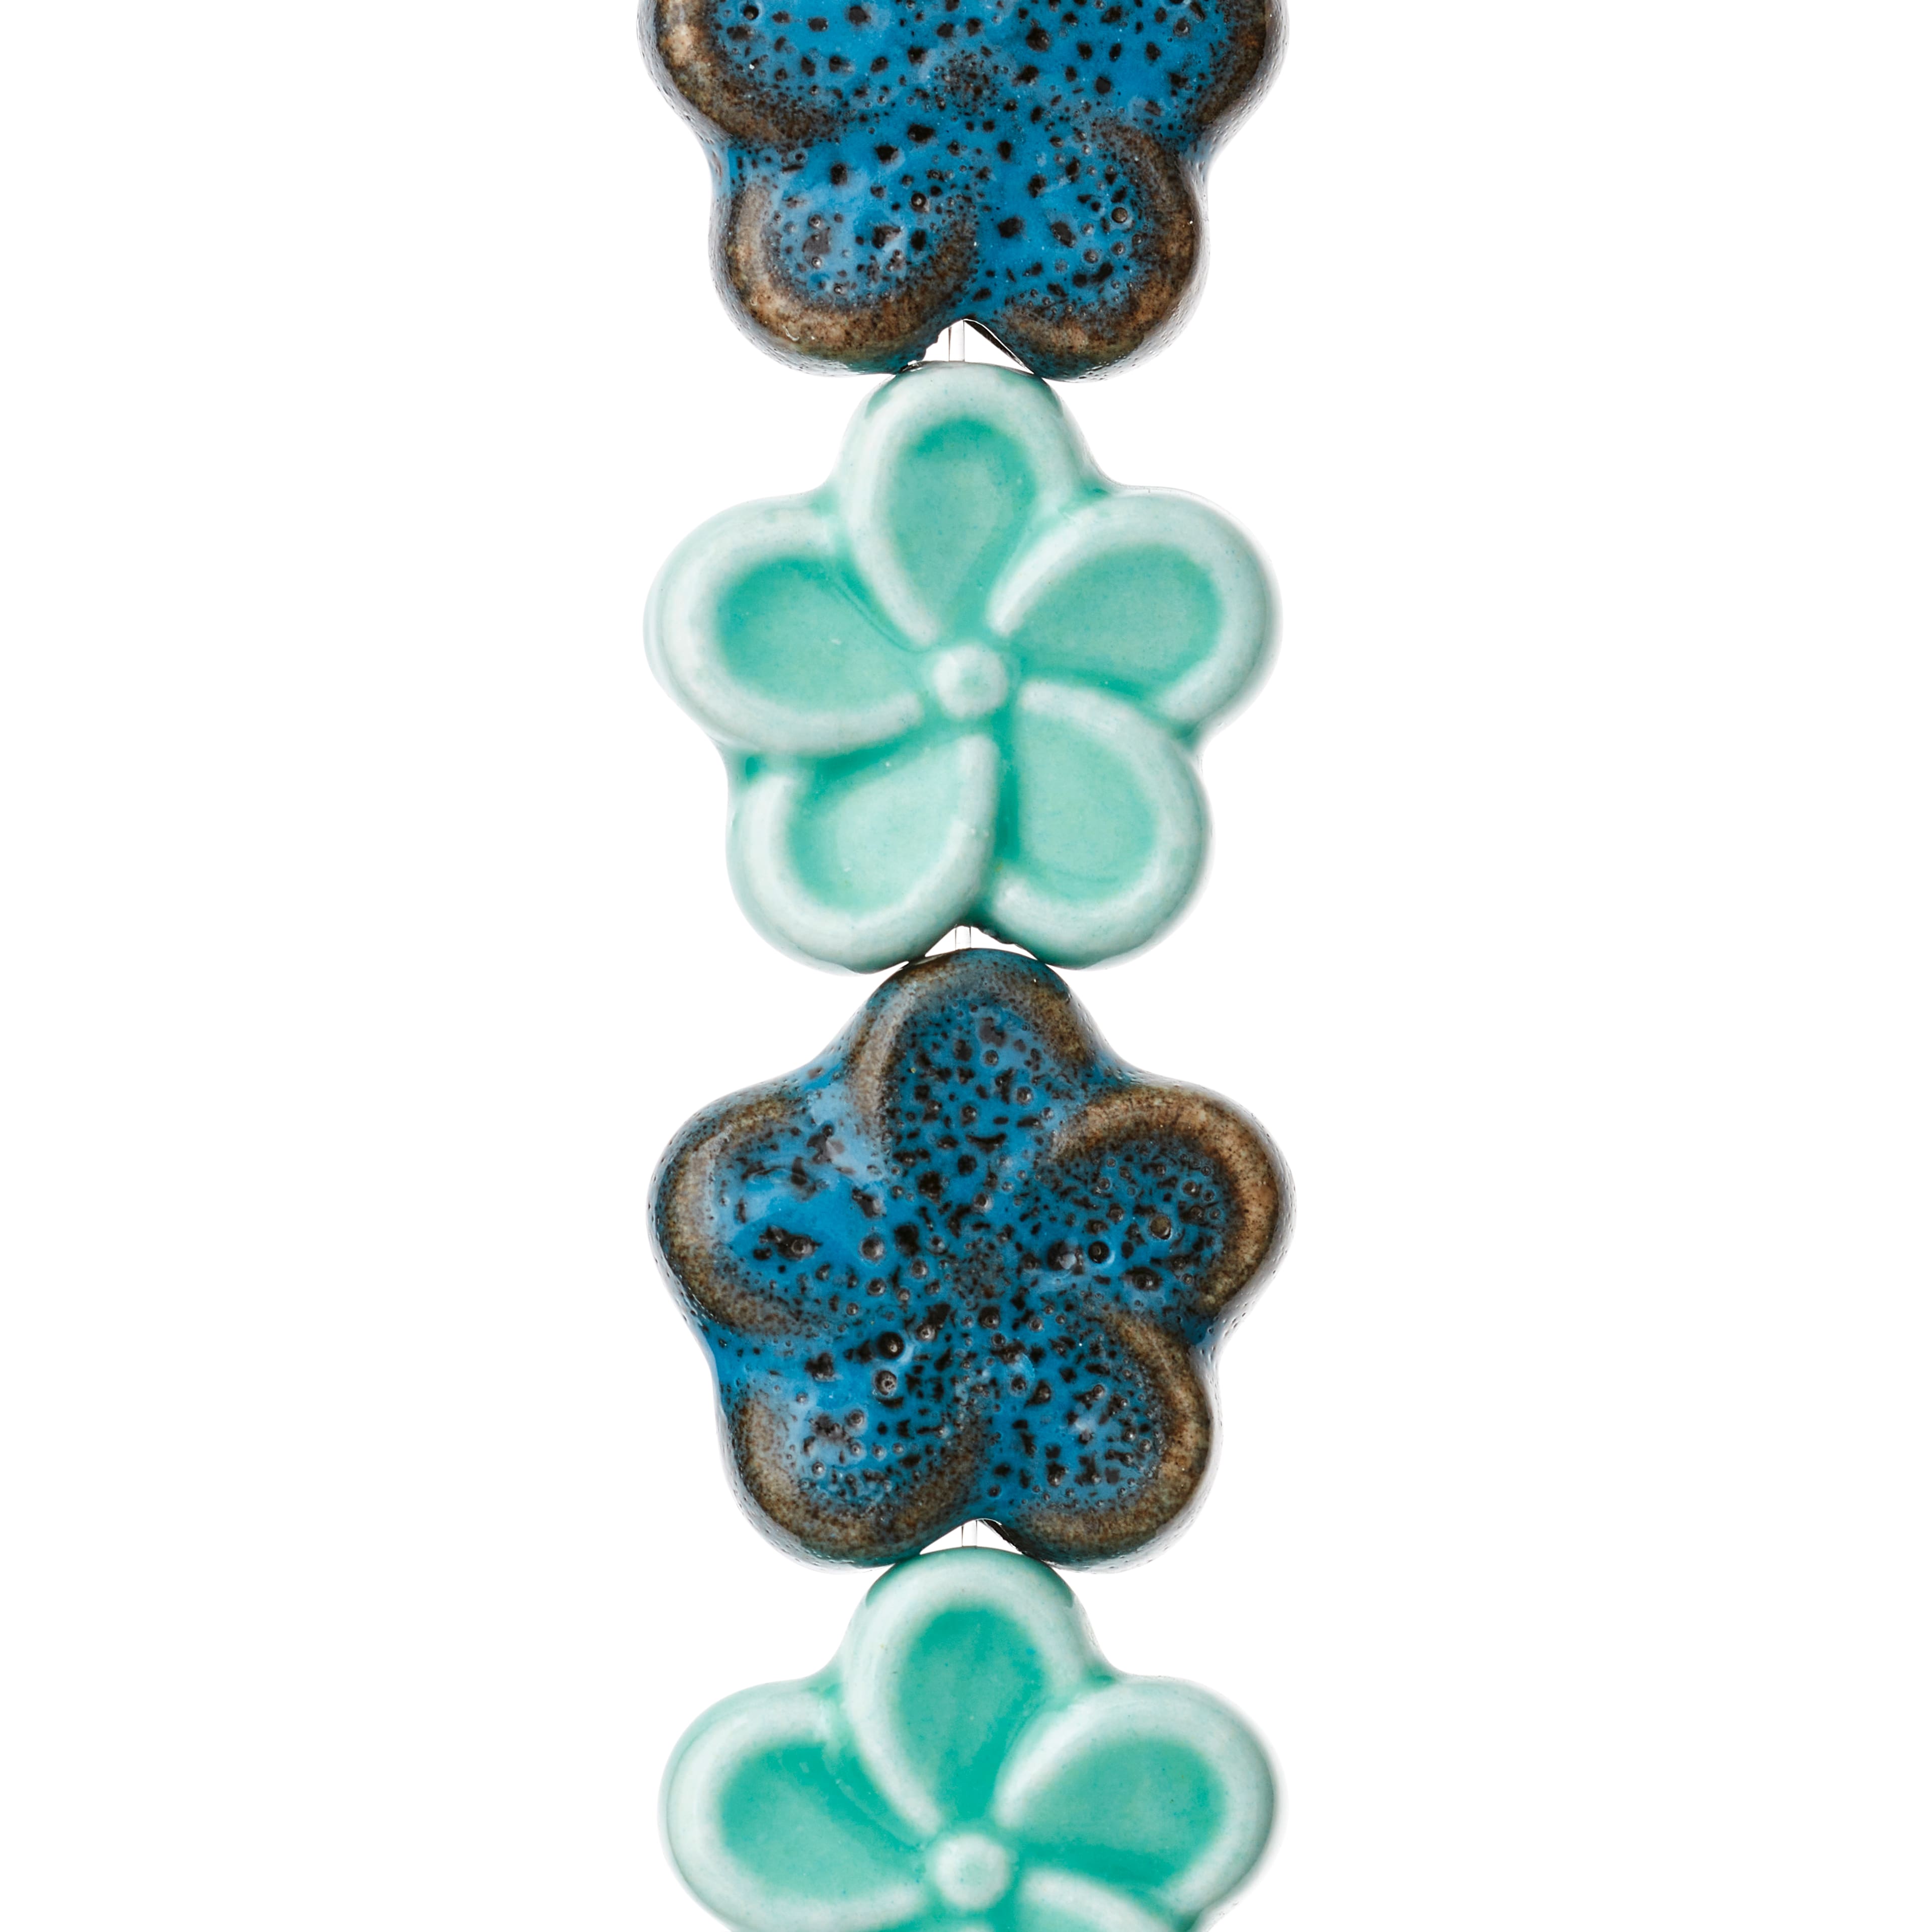 12 Packs: 8 ct. (96 total) Aqua Mix Flower Ceramic Beads, 18mm by Bead Landing&#x2122;